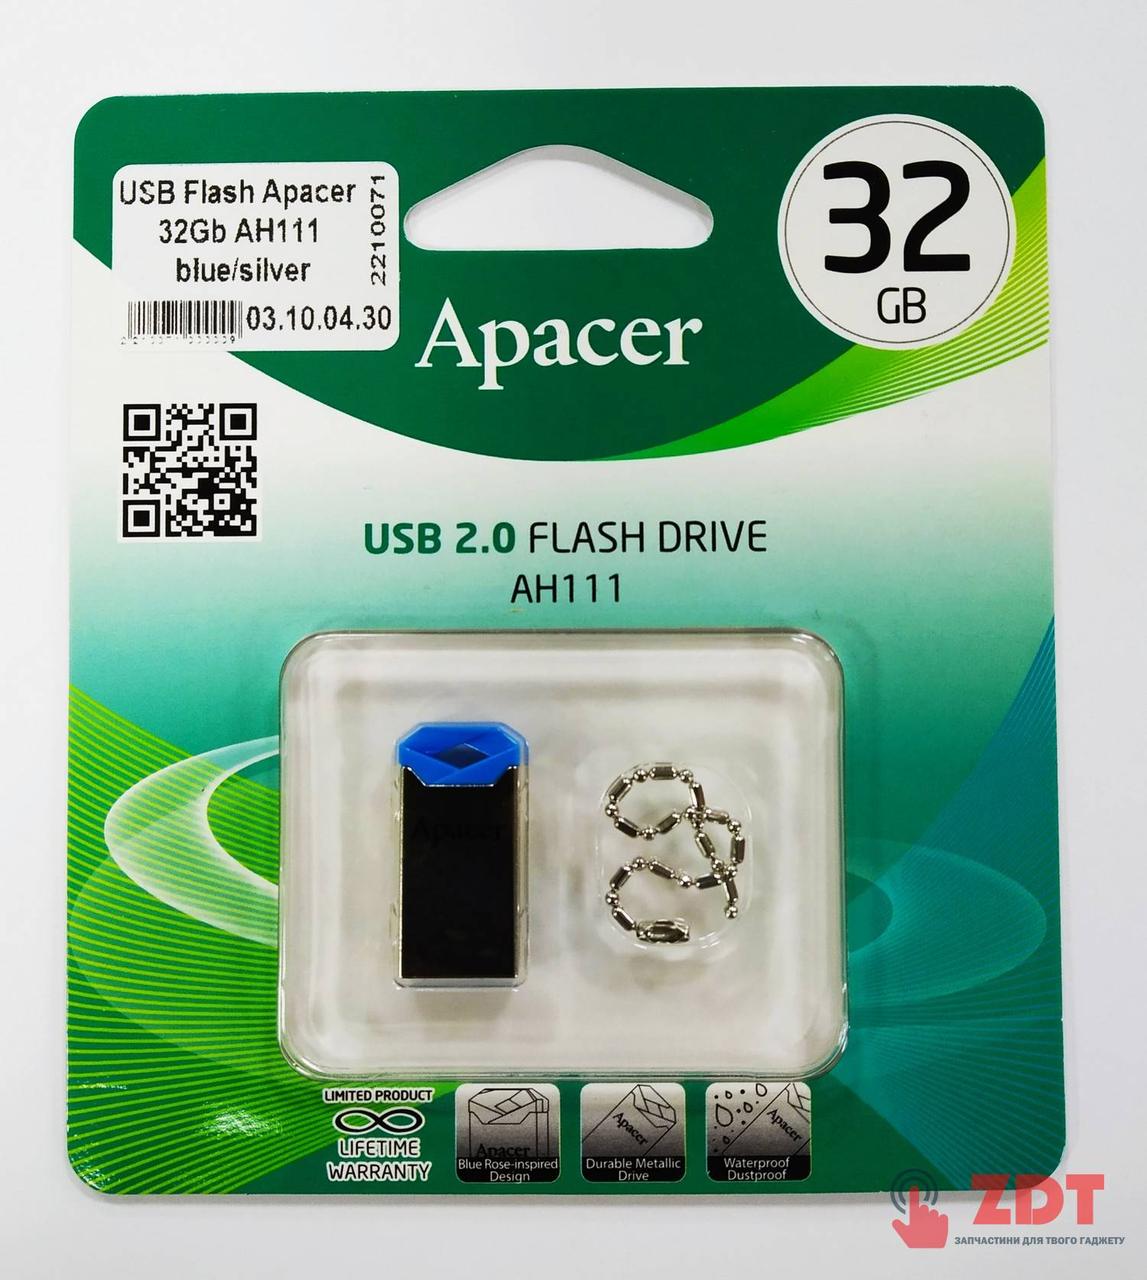 (ZP) USB Flash Apacer 32Gb AH111 blue/silver